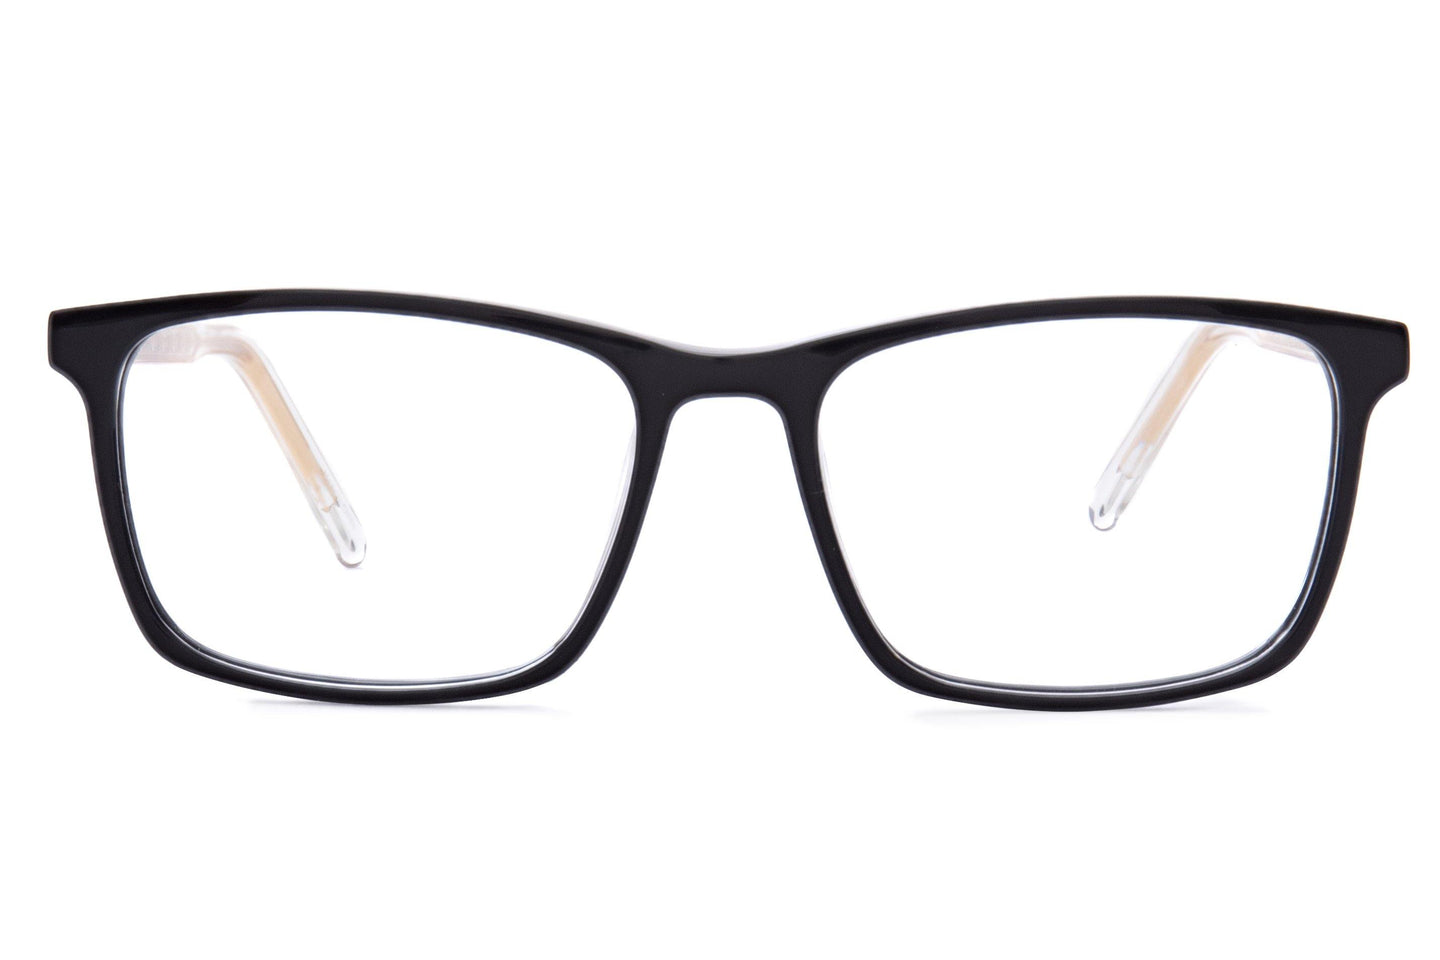 Beckett | Baxter Phillips | Fashionable Prescription Eyewear